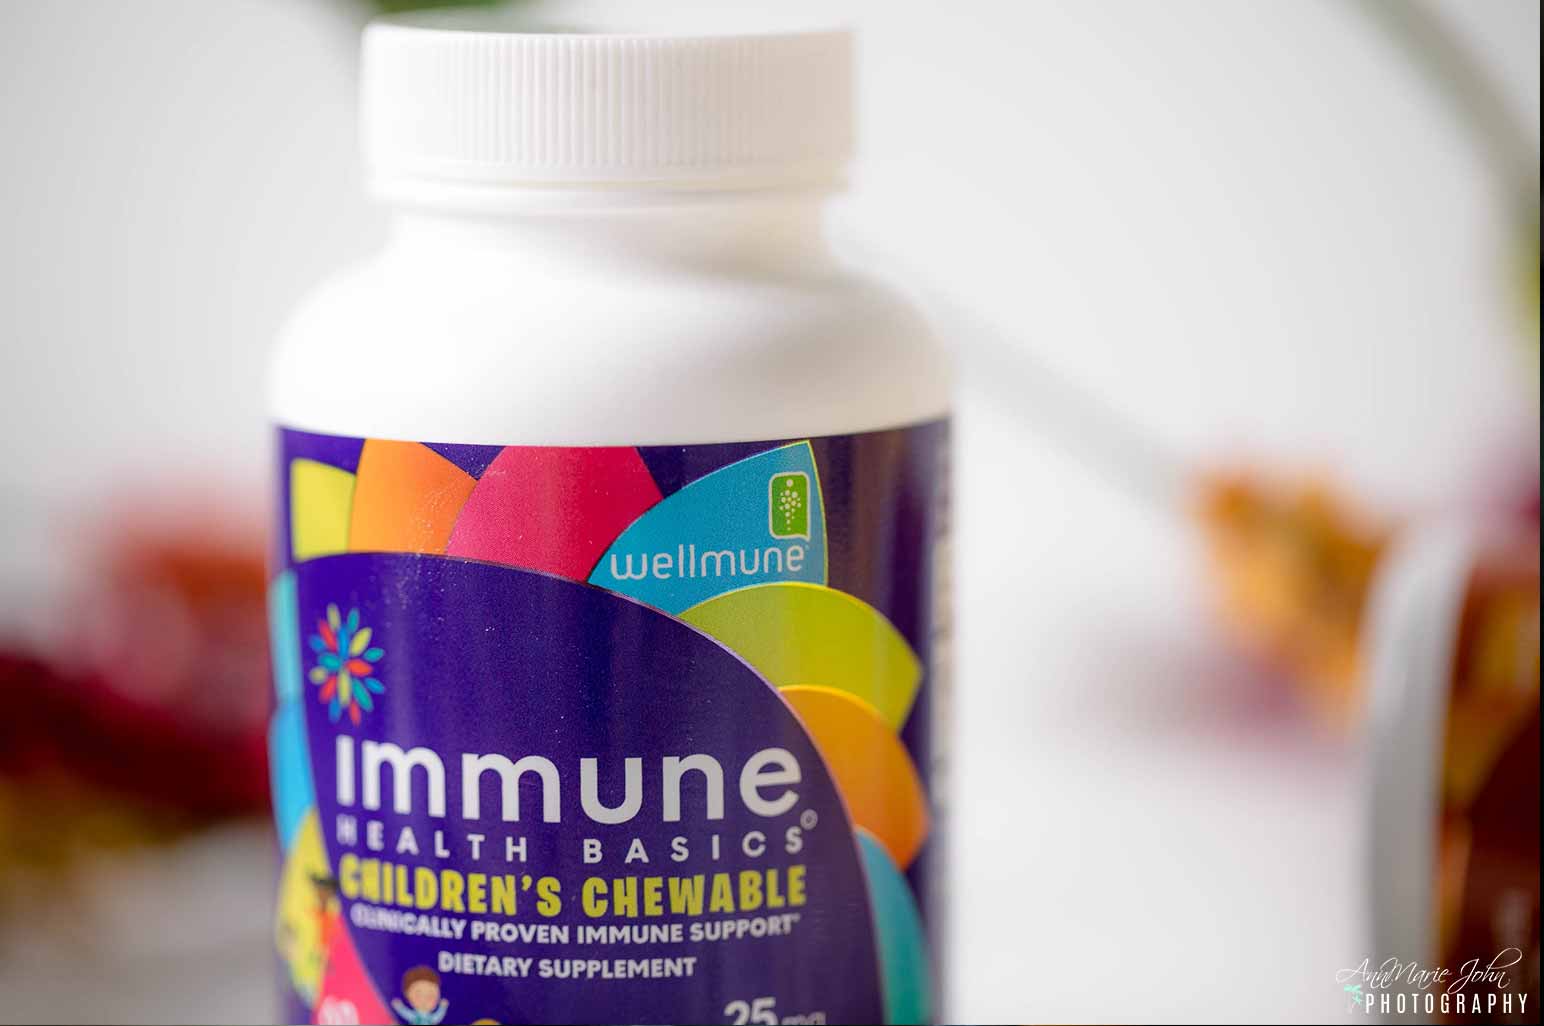 Immune Support Supplements